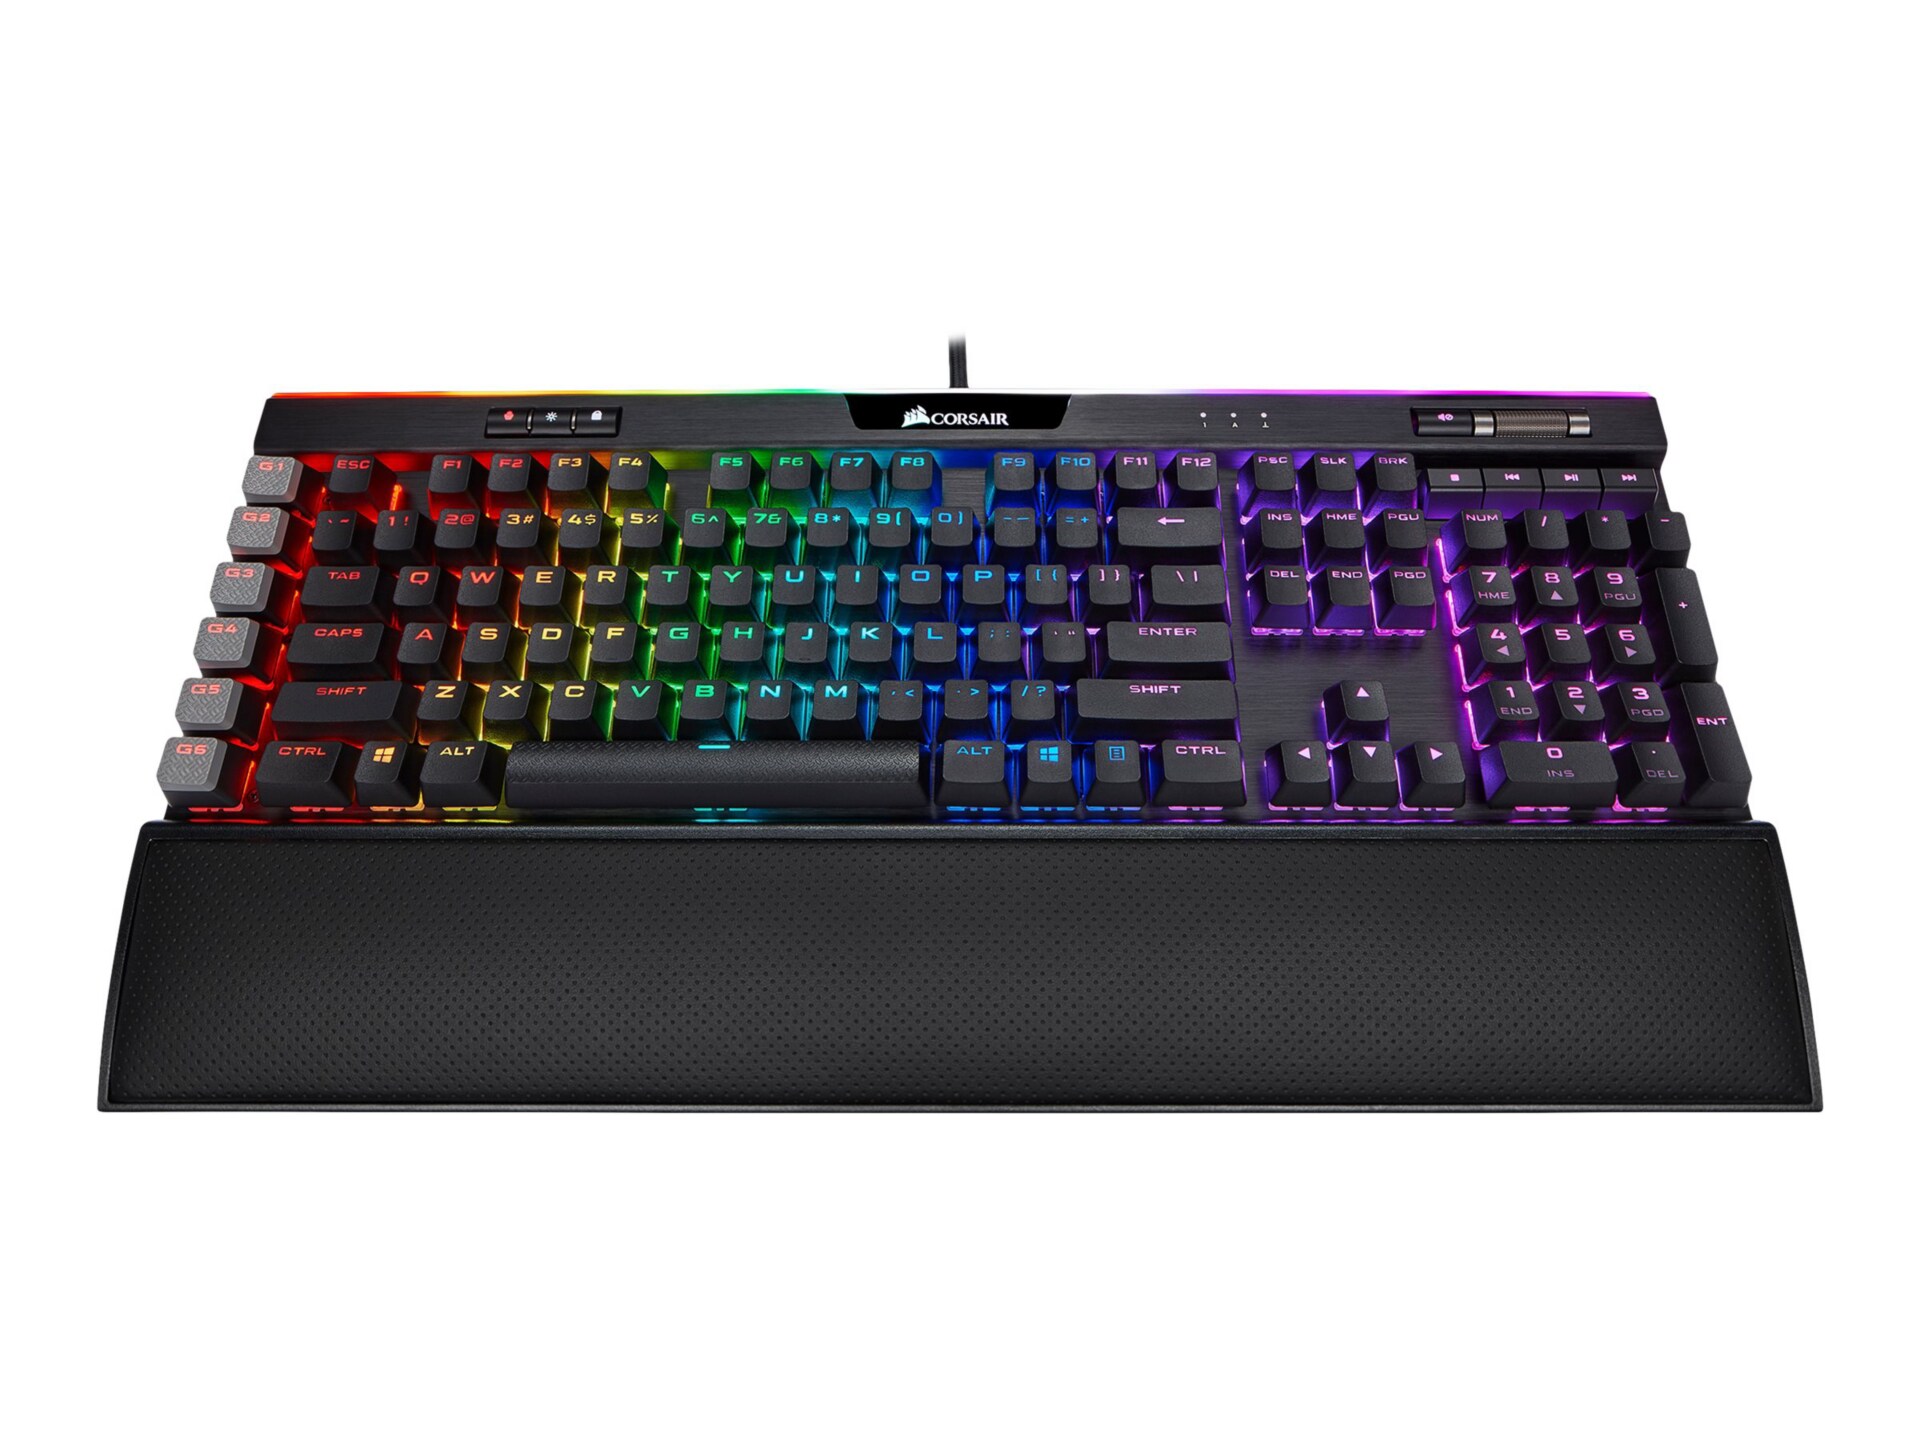 CORSAIR Gaming K95 PLATINUM XT - keyboard - English - black - CH-9127414-NA - Keyboards - CDW.com